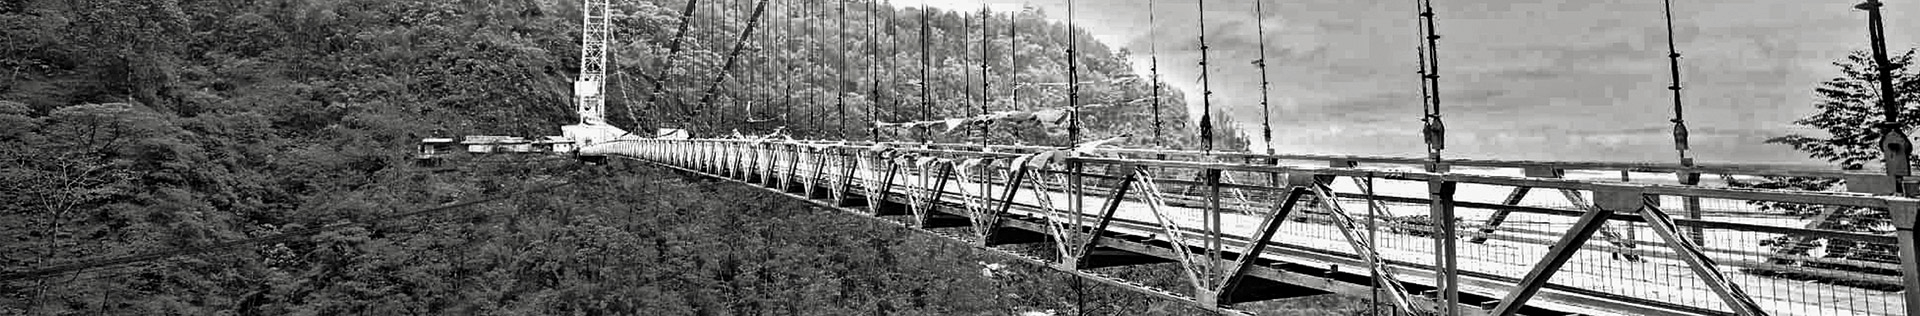 Black and White image of Bridge